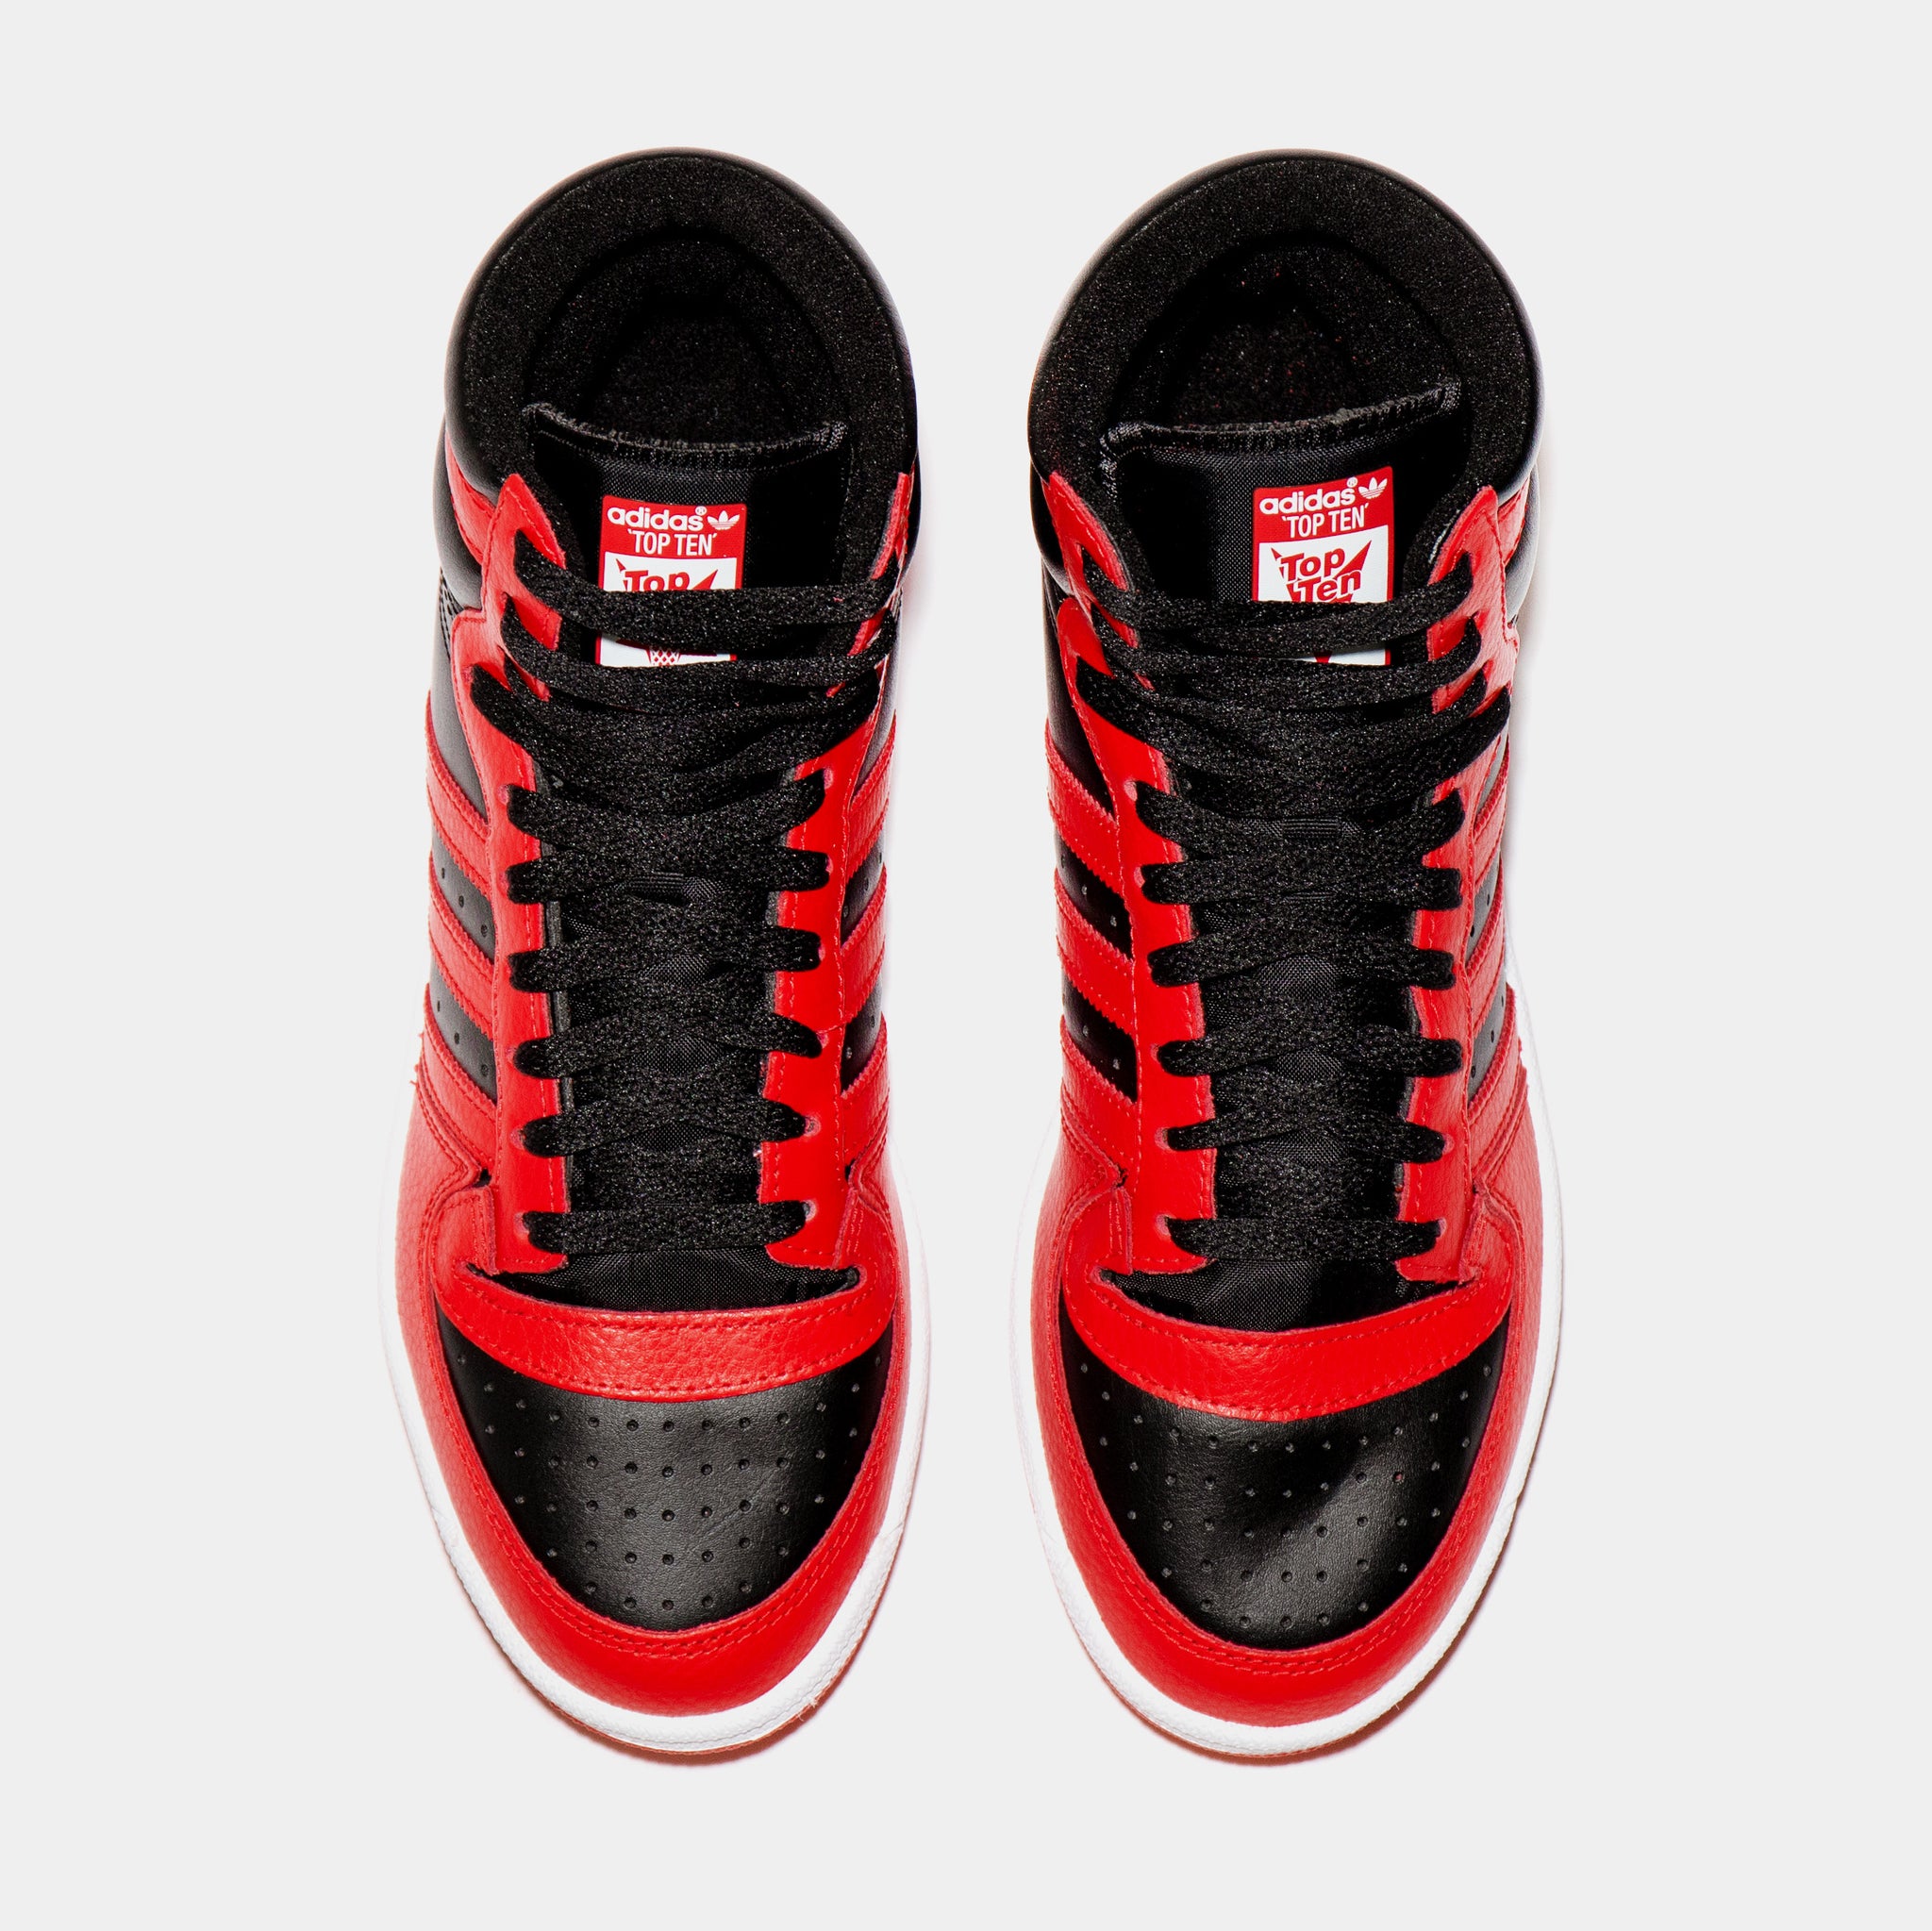 de wind is sterk Wrok krom adidas Top Ten Hi Mens Basketball Shoes Black Red GX0756 – Shoe Palace